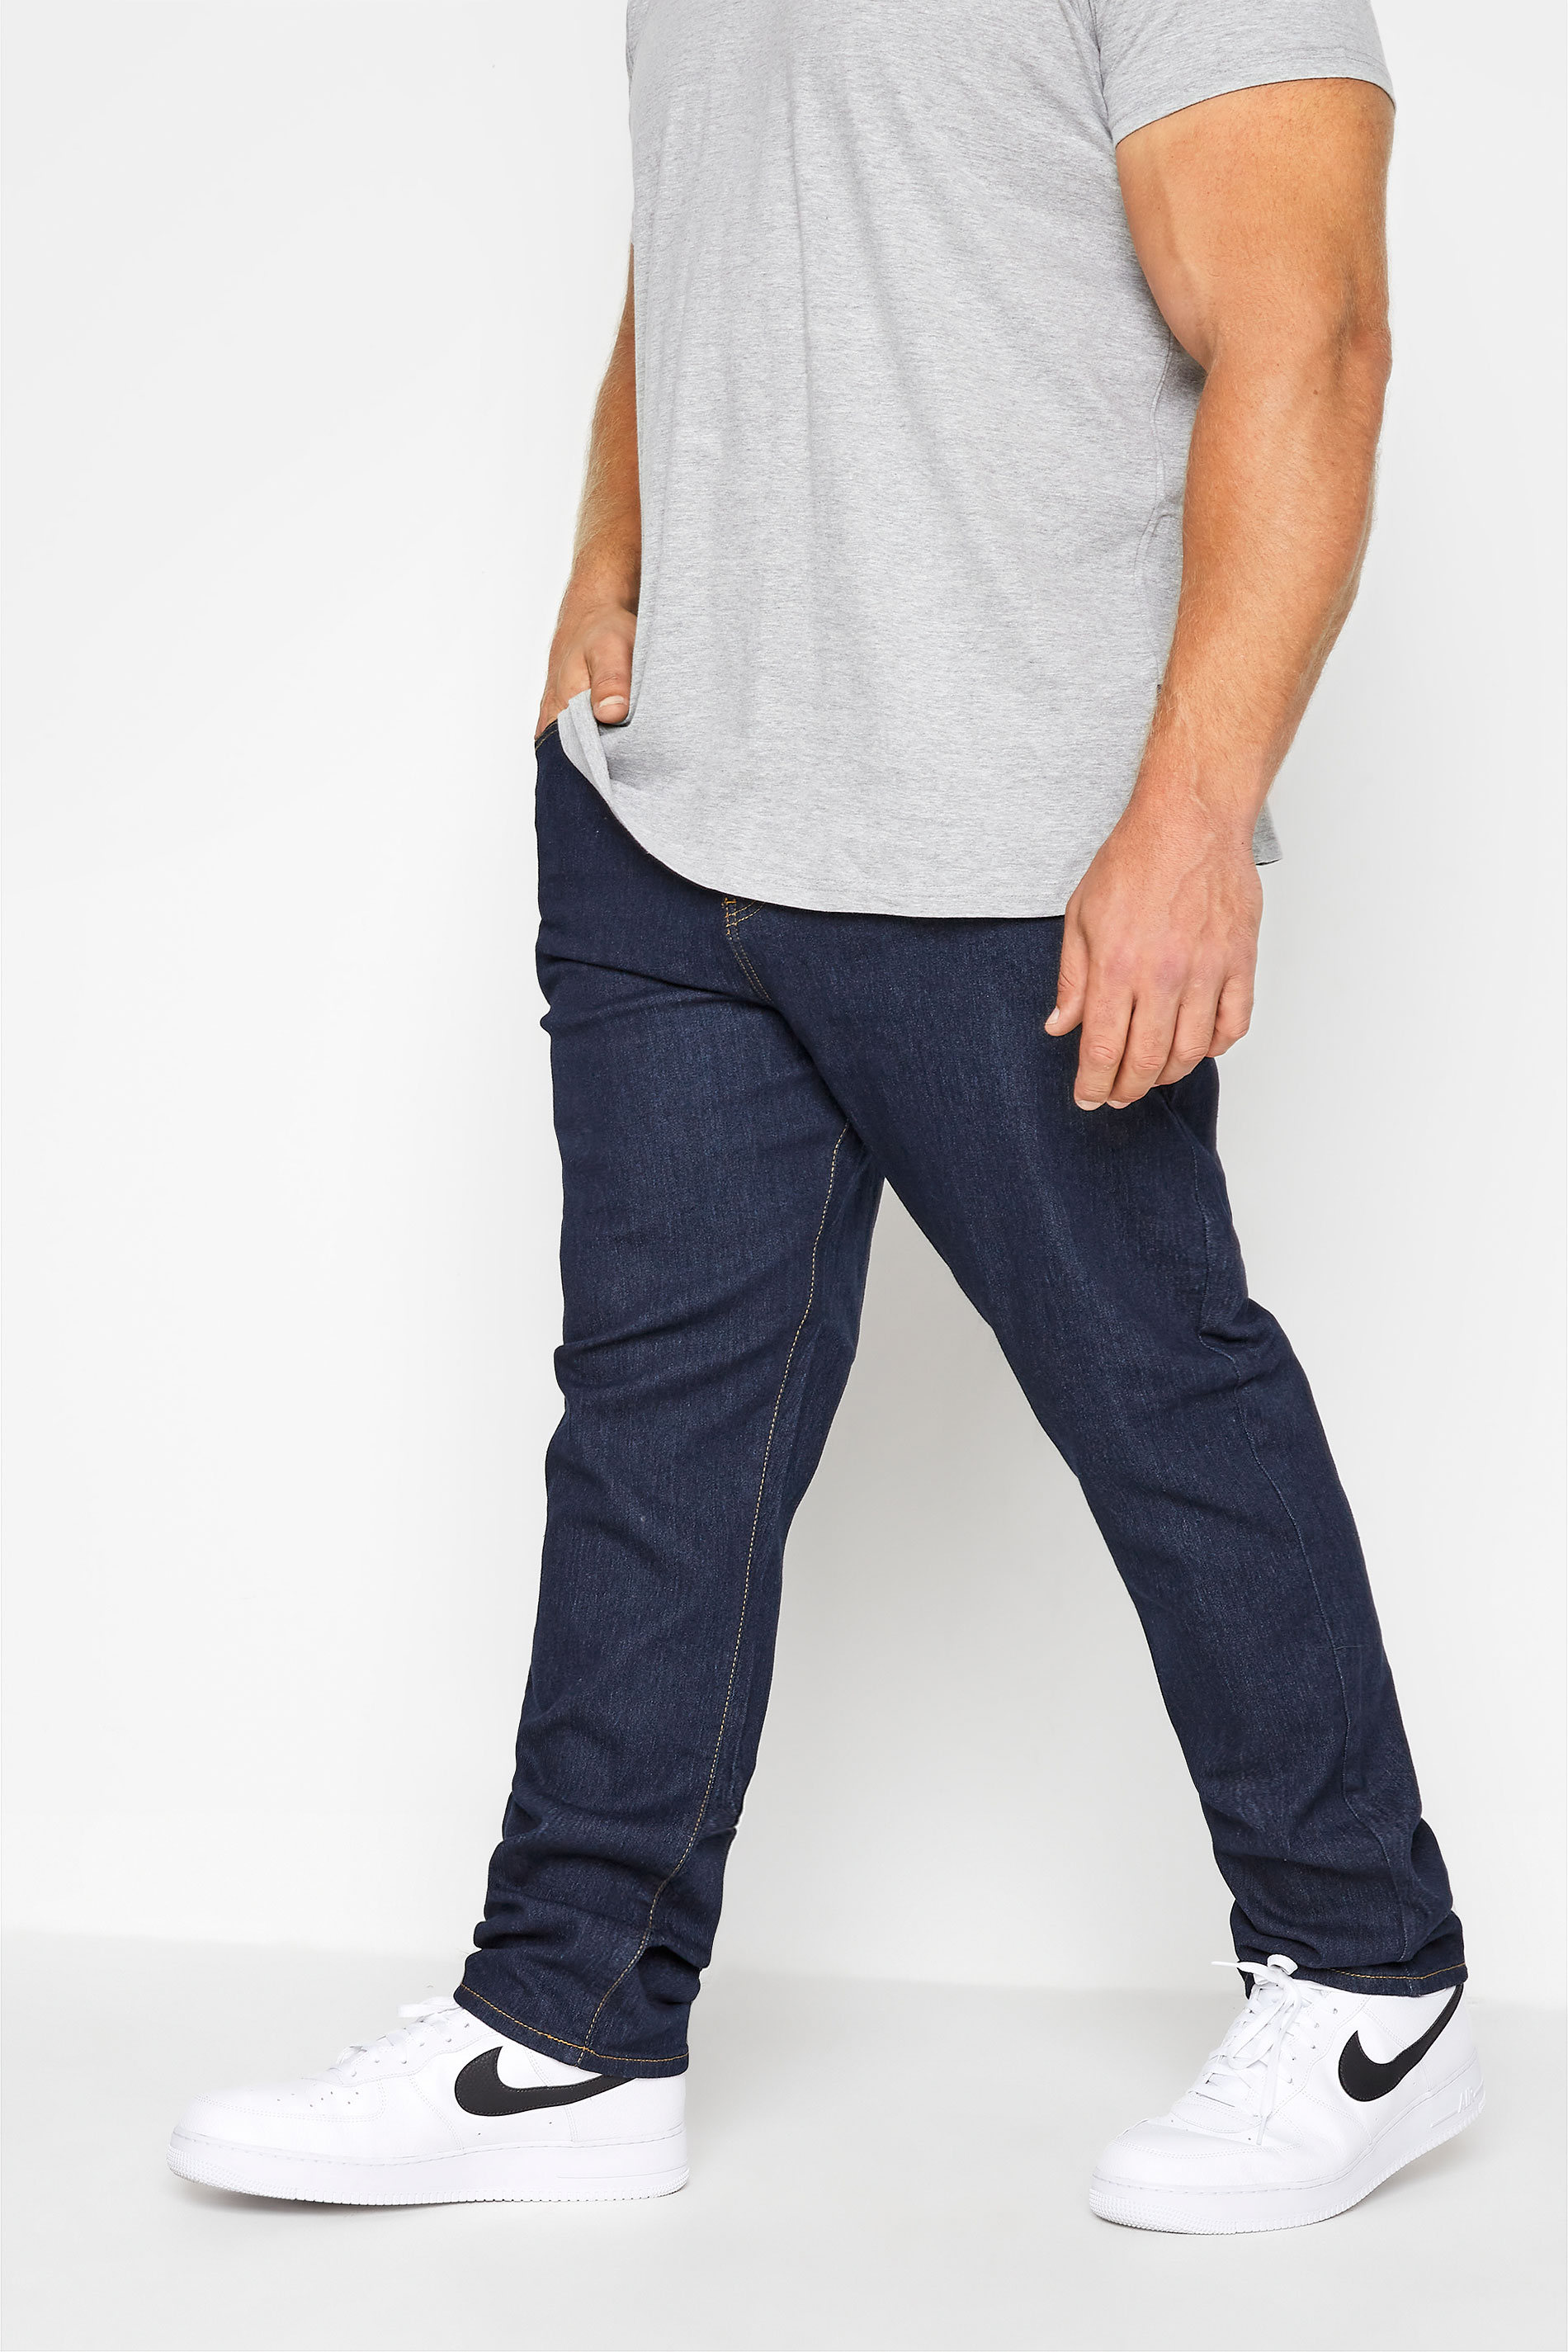 Image of Inside Leg Size 29", Waist Size 44 Mens Kam Big & Tall Indigo Blue Regular Fit Stretch Jeans Big & Tall